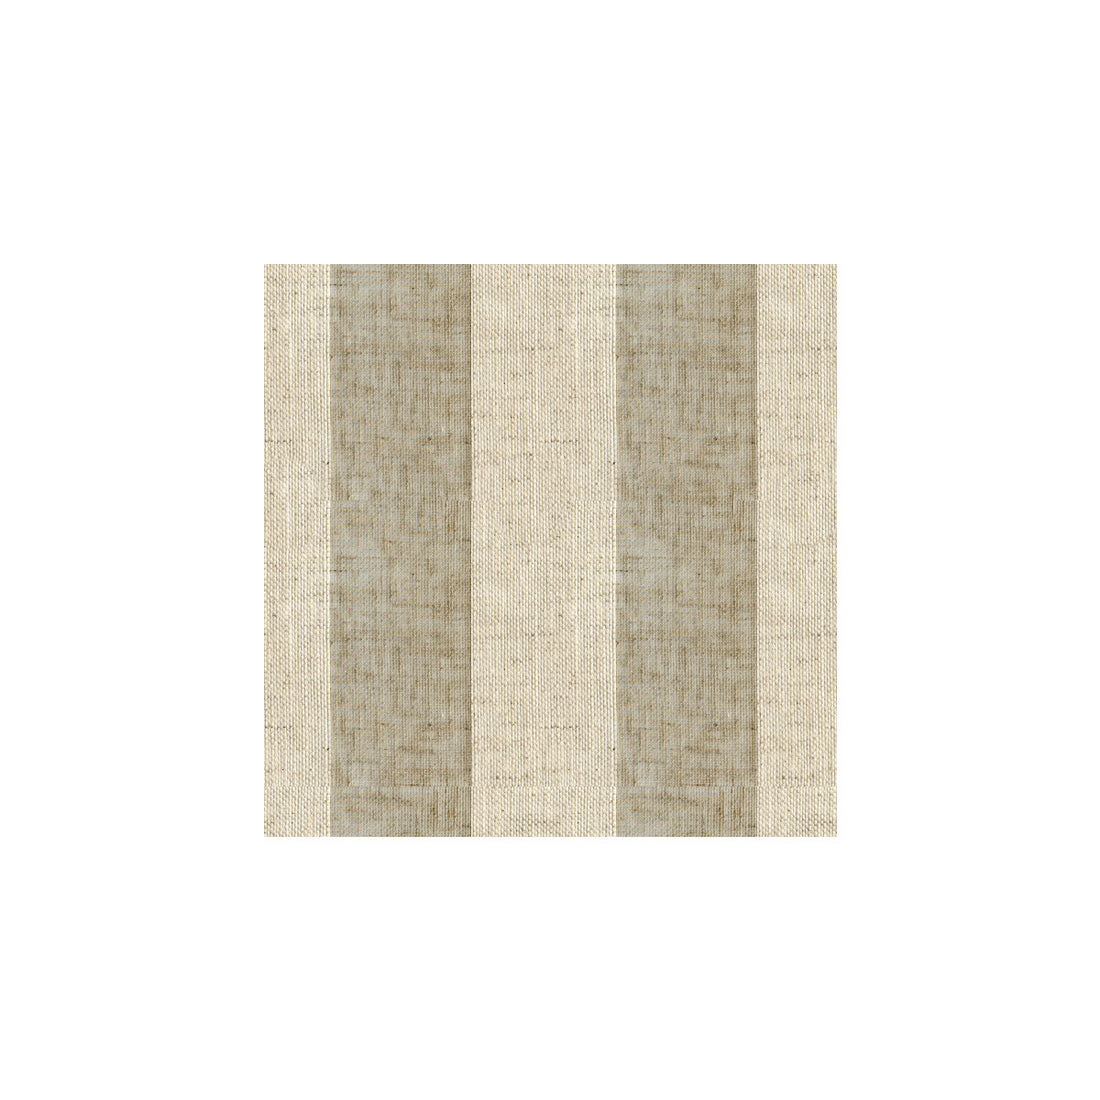 Kravet Basics fabric in 3689-16 color - pattern 3689.16.0 - by Kravet Basics in the Gis collection